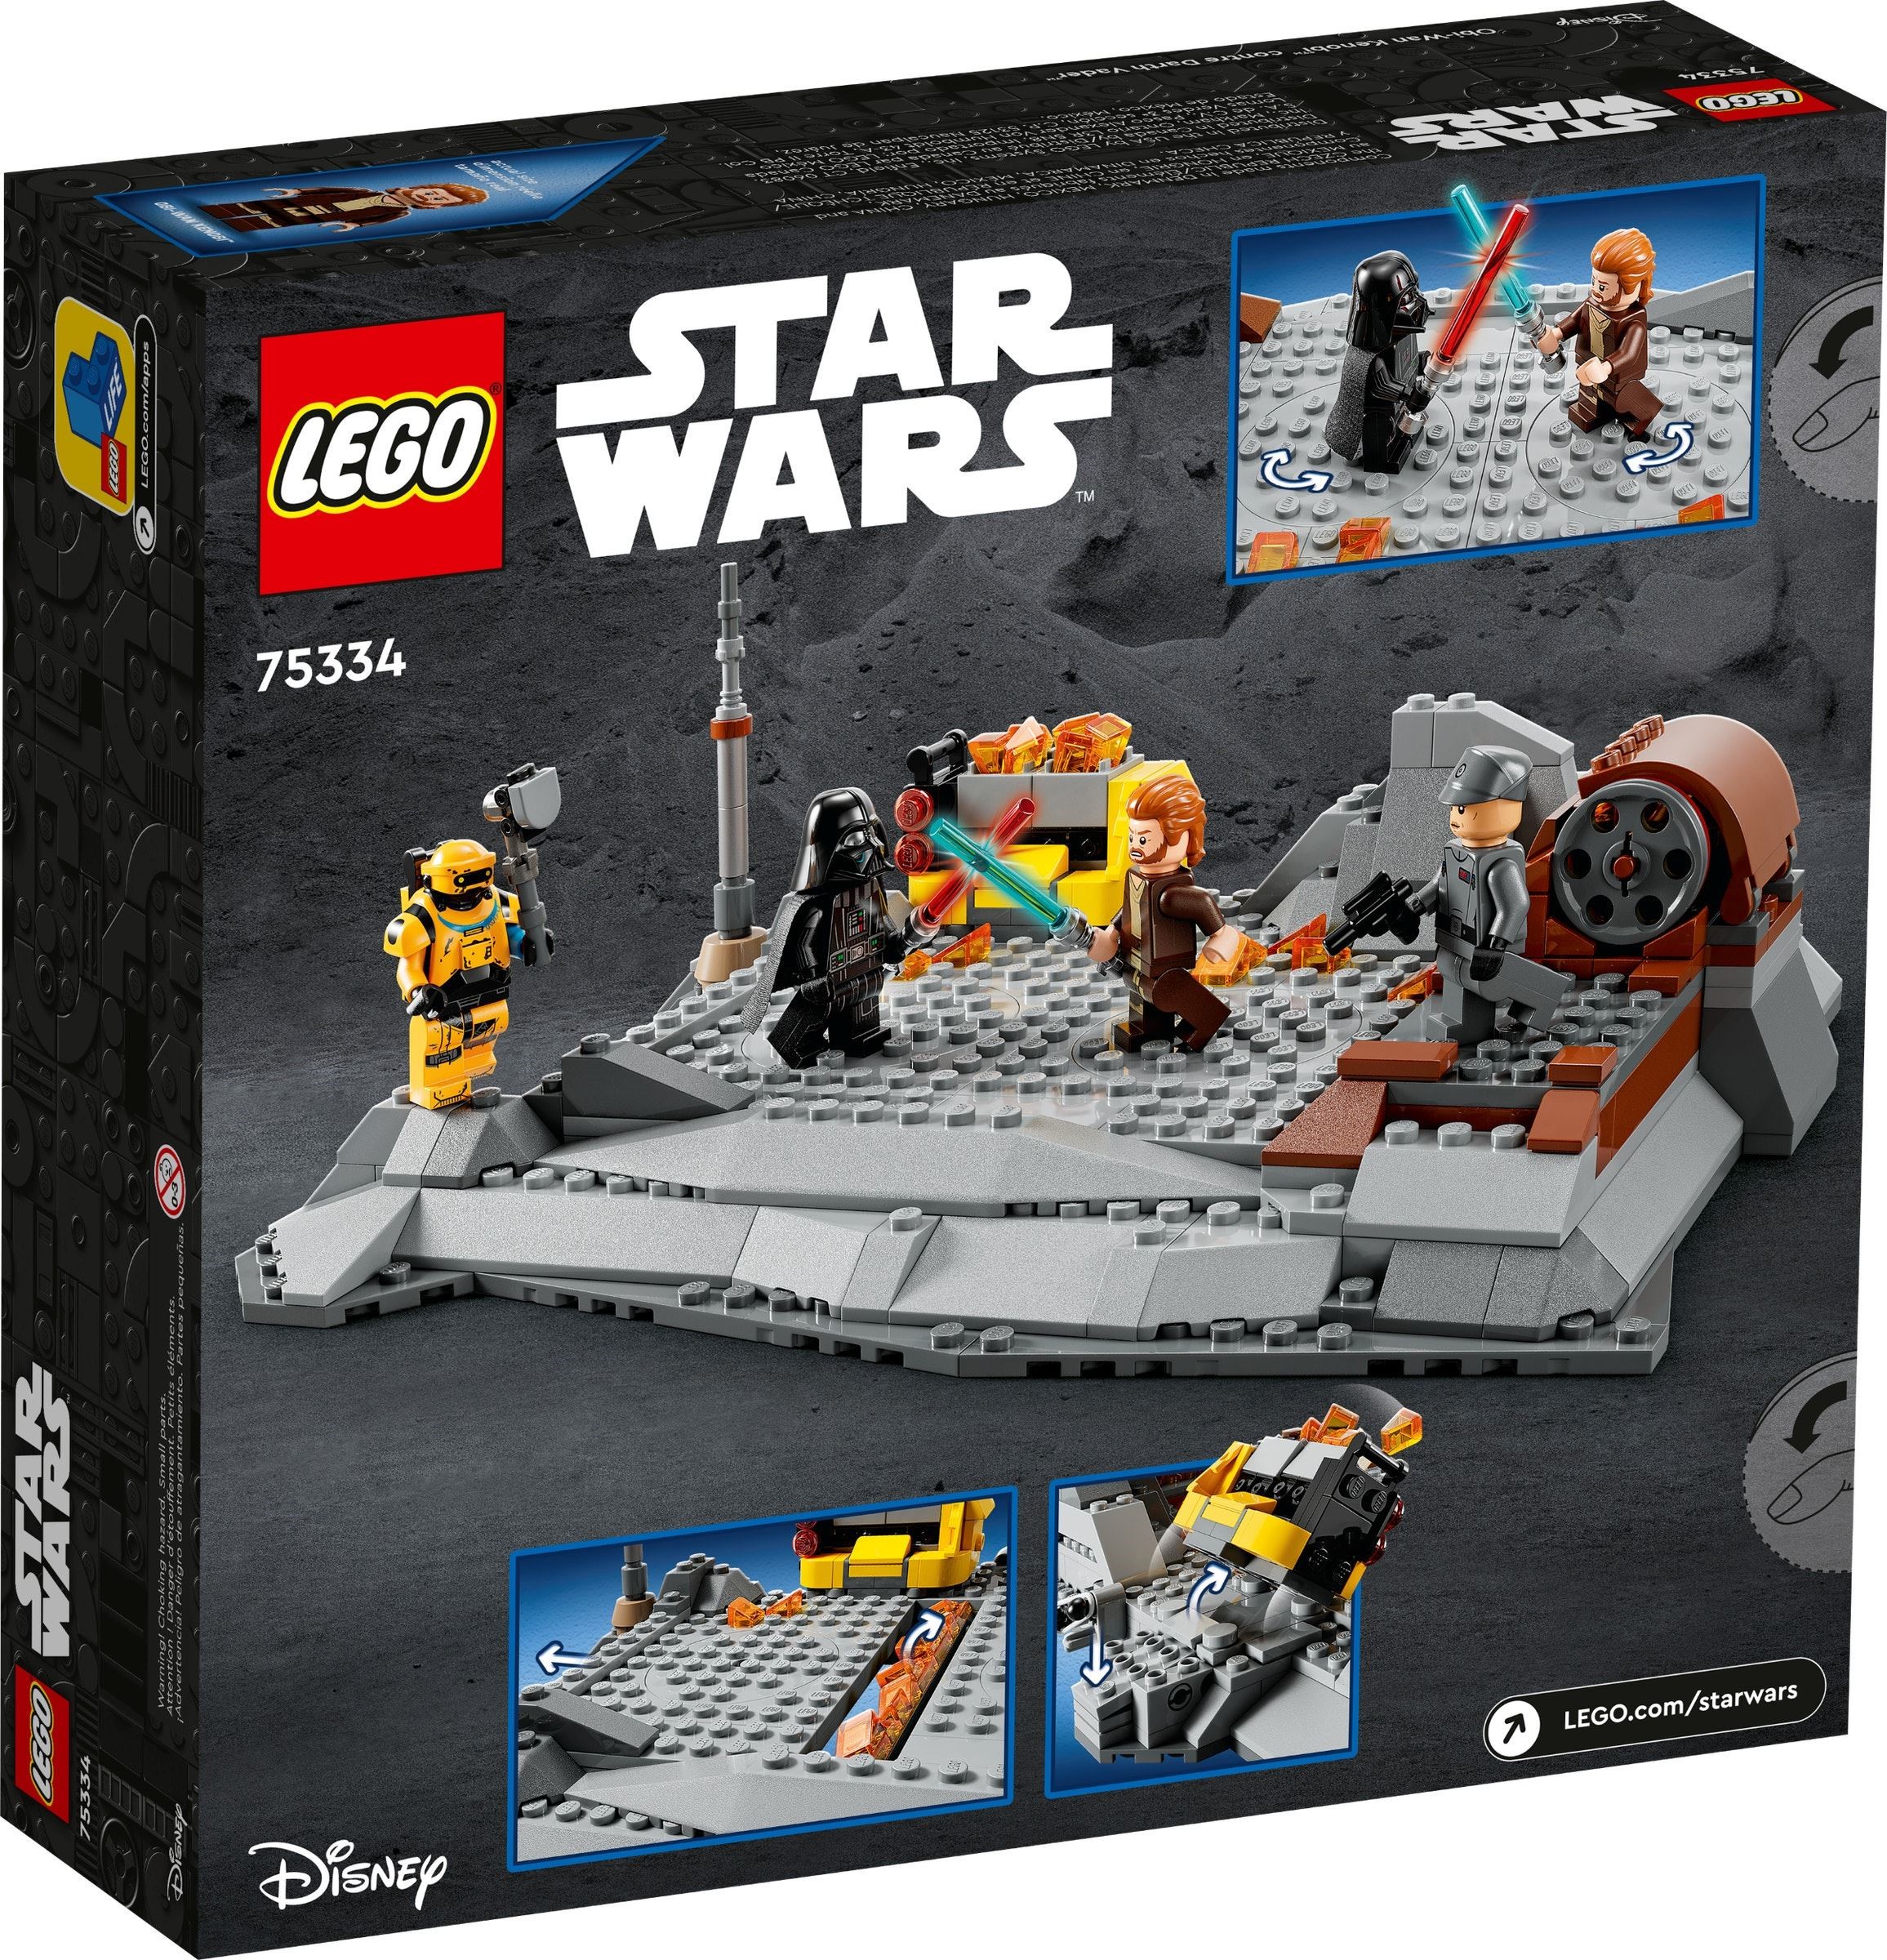 LEGO Star Wars - 75334 - Obi-Wan Kenobi VS Darth Vader